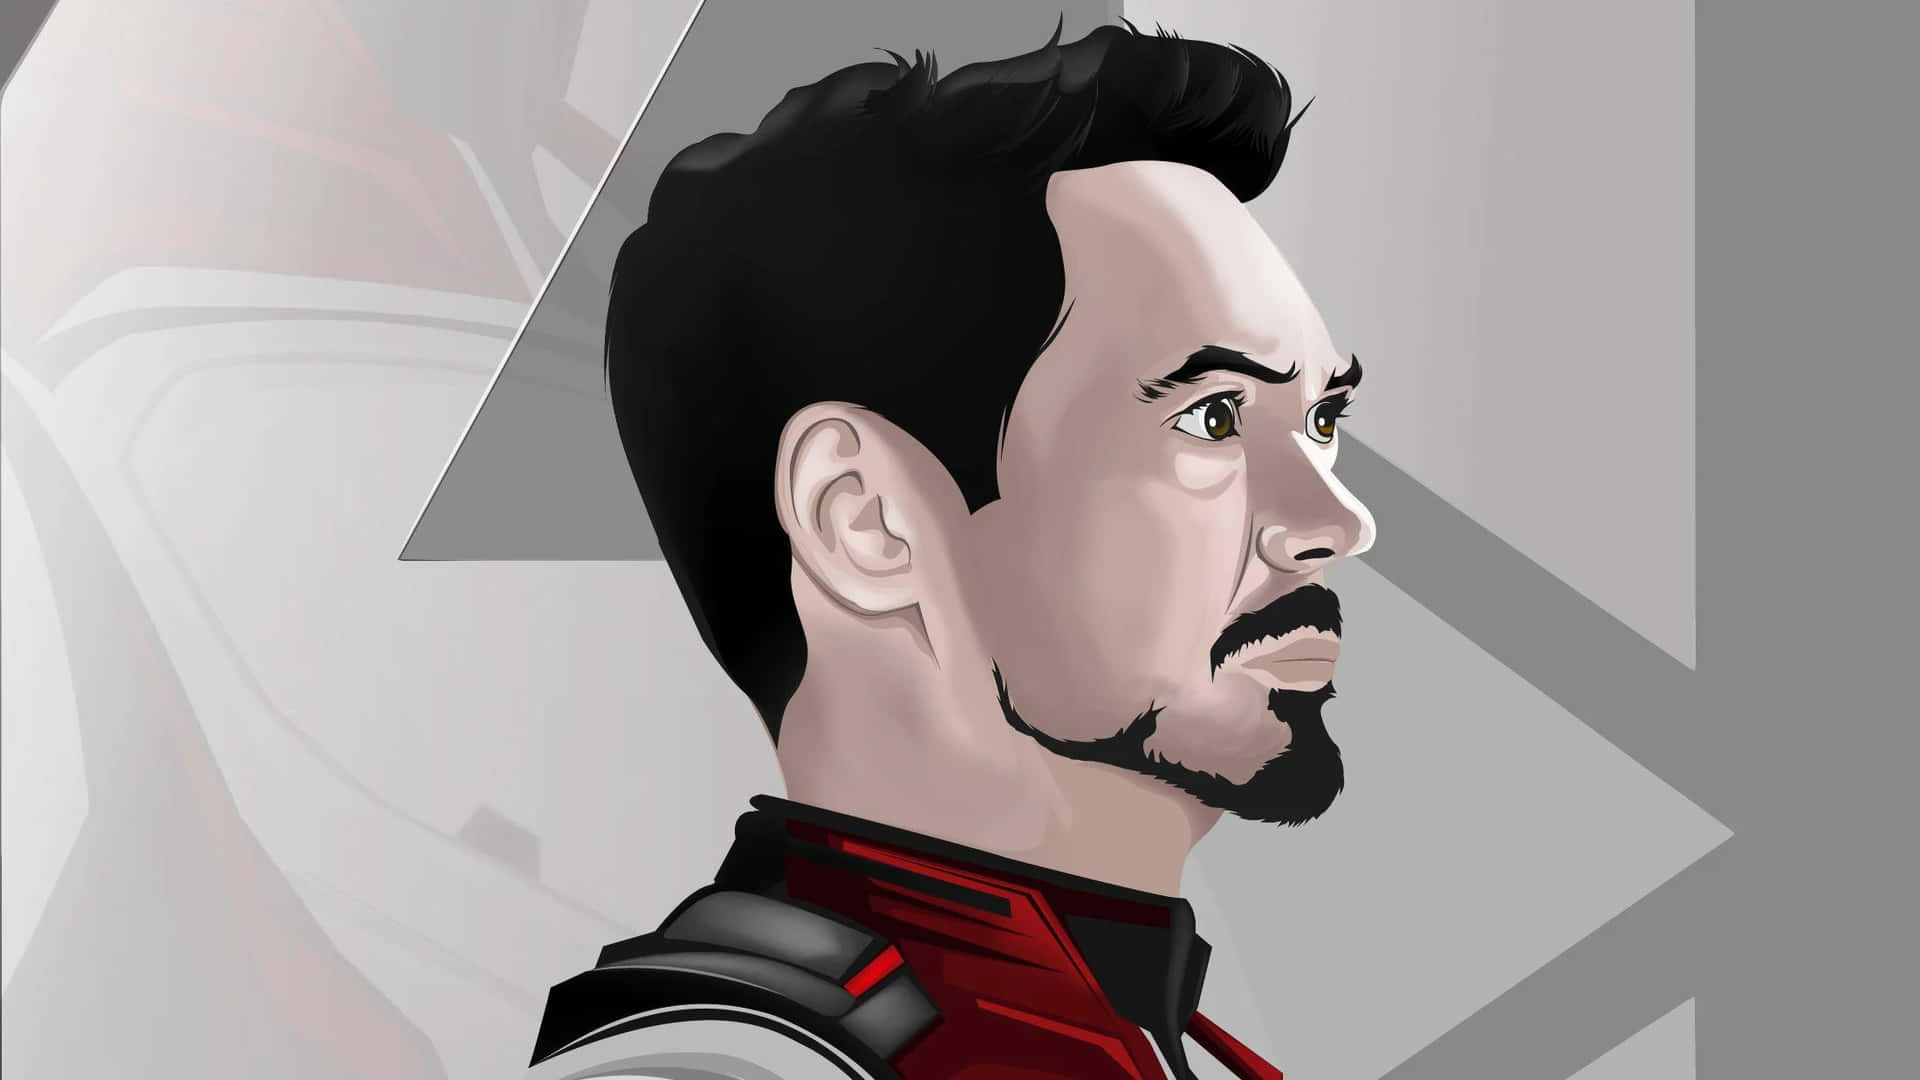 Tony Stark Illustration